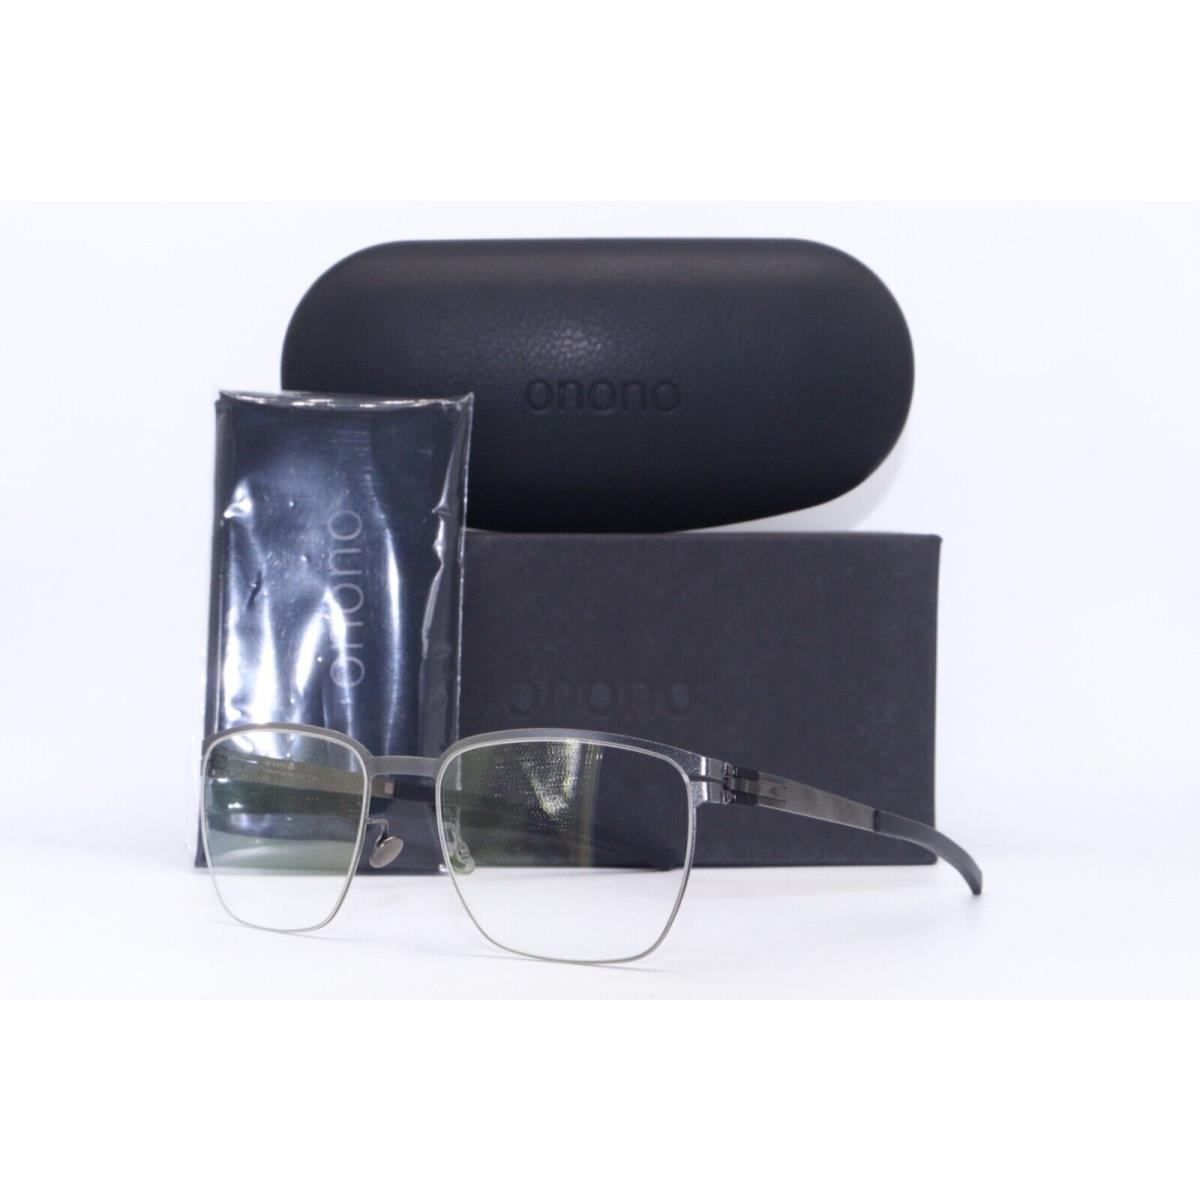 IC Berlin Onono T31-19-4 Slate Black Frames Eyeglasses 53-20